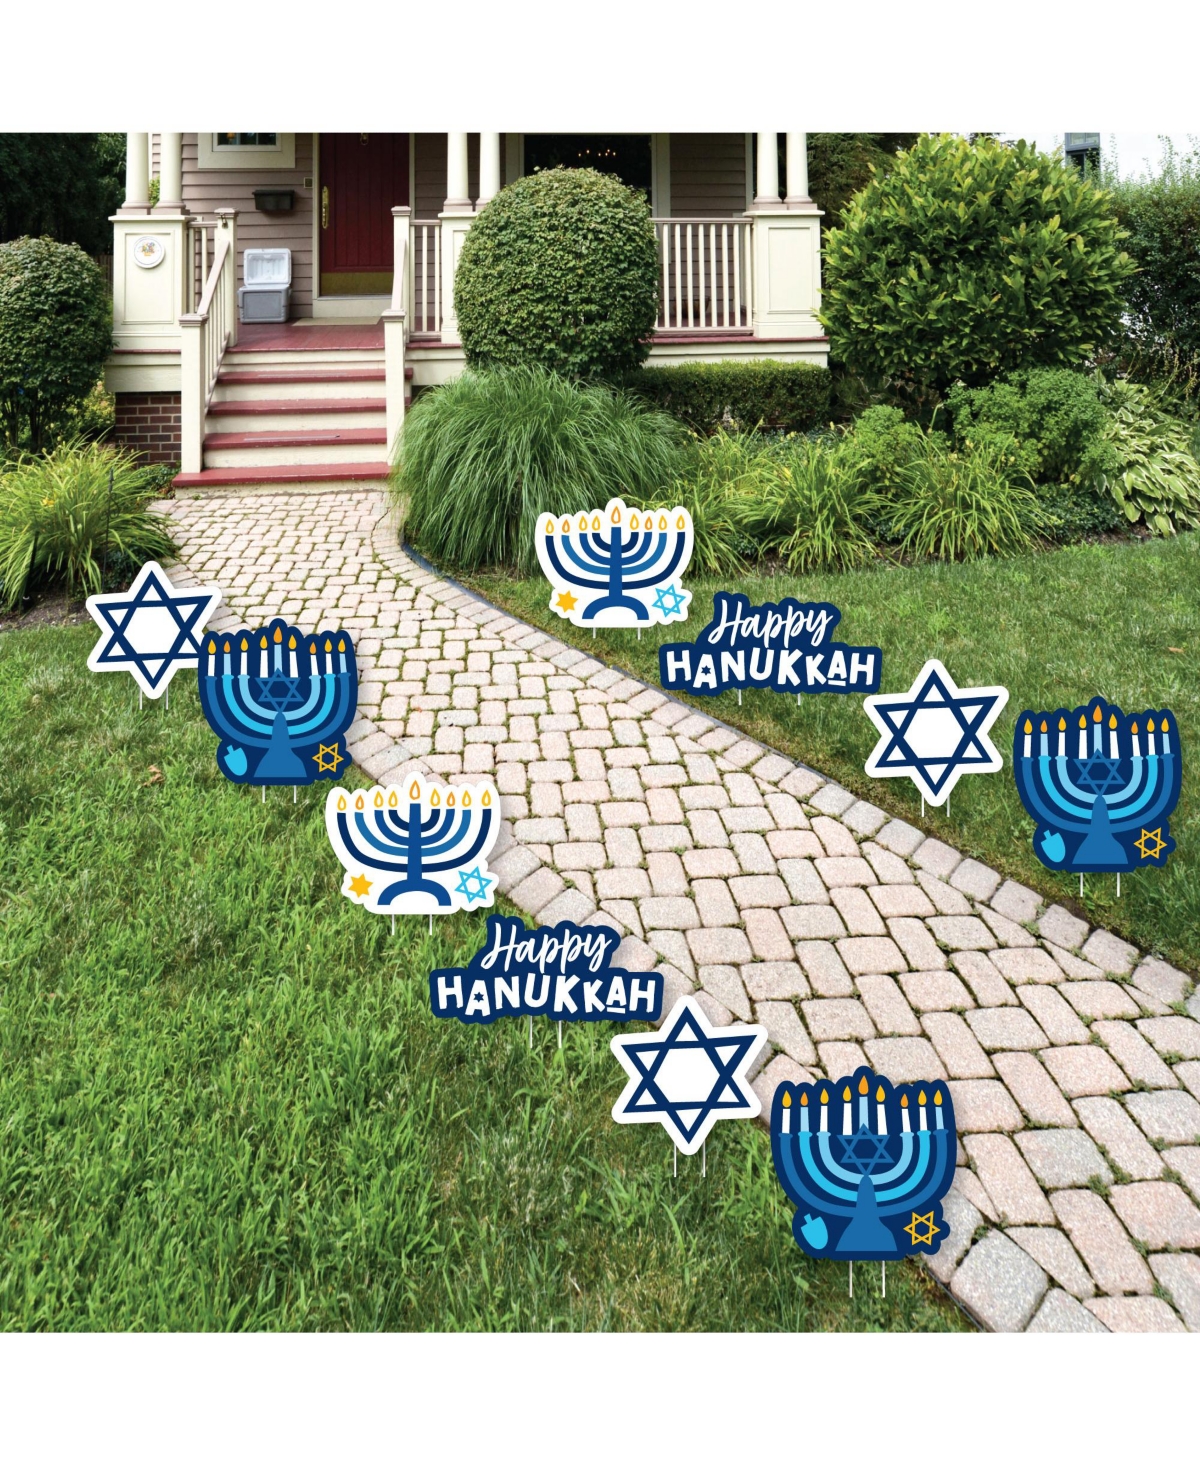 Hanukkah Menorah Outdoor Lawn Chanukah Holiday Party Yard Decorations 10 Pc